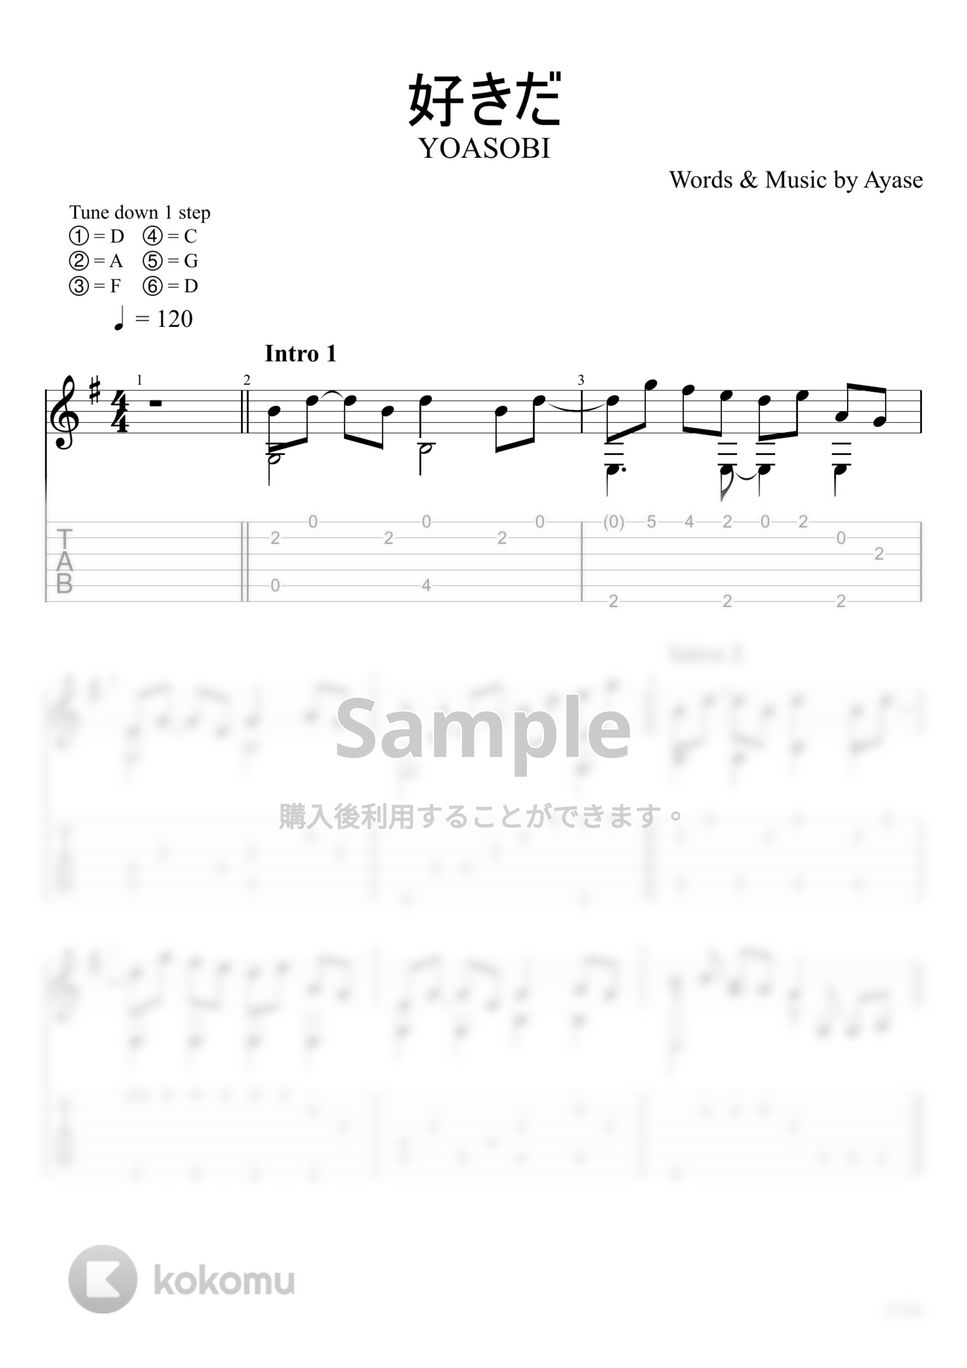 YOASOBI - 好きだ (ソロギター) by u3danchou